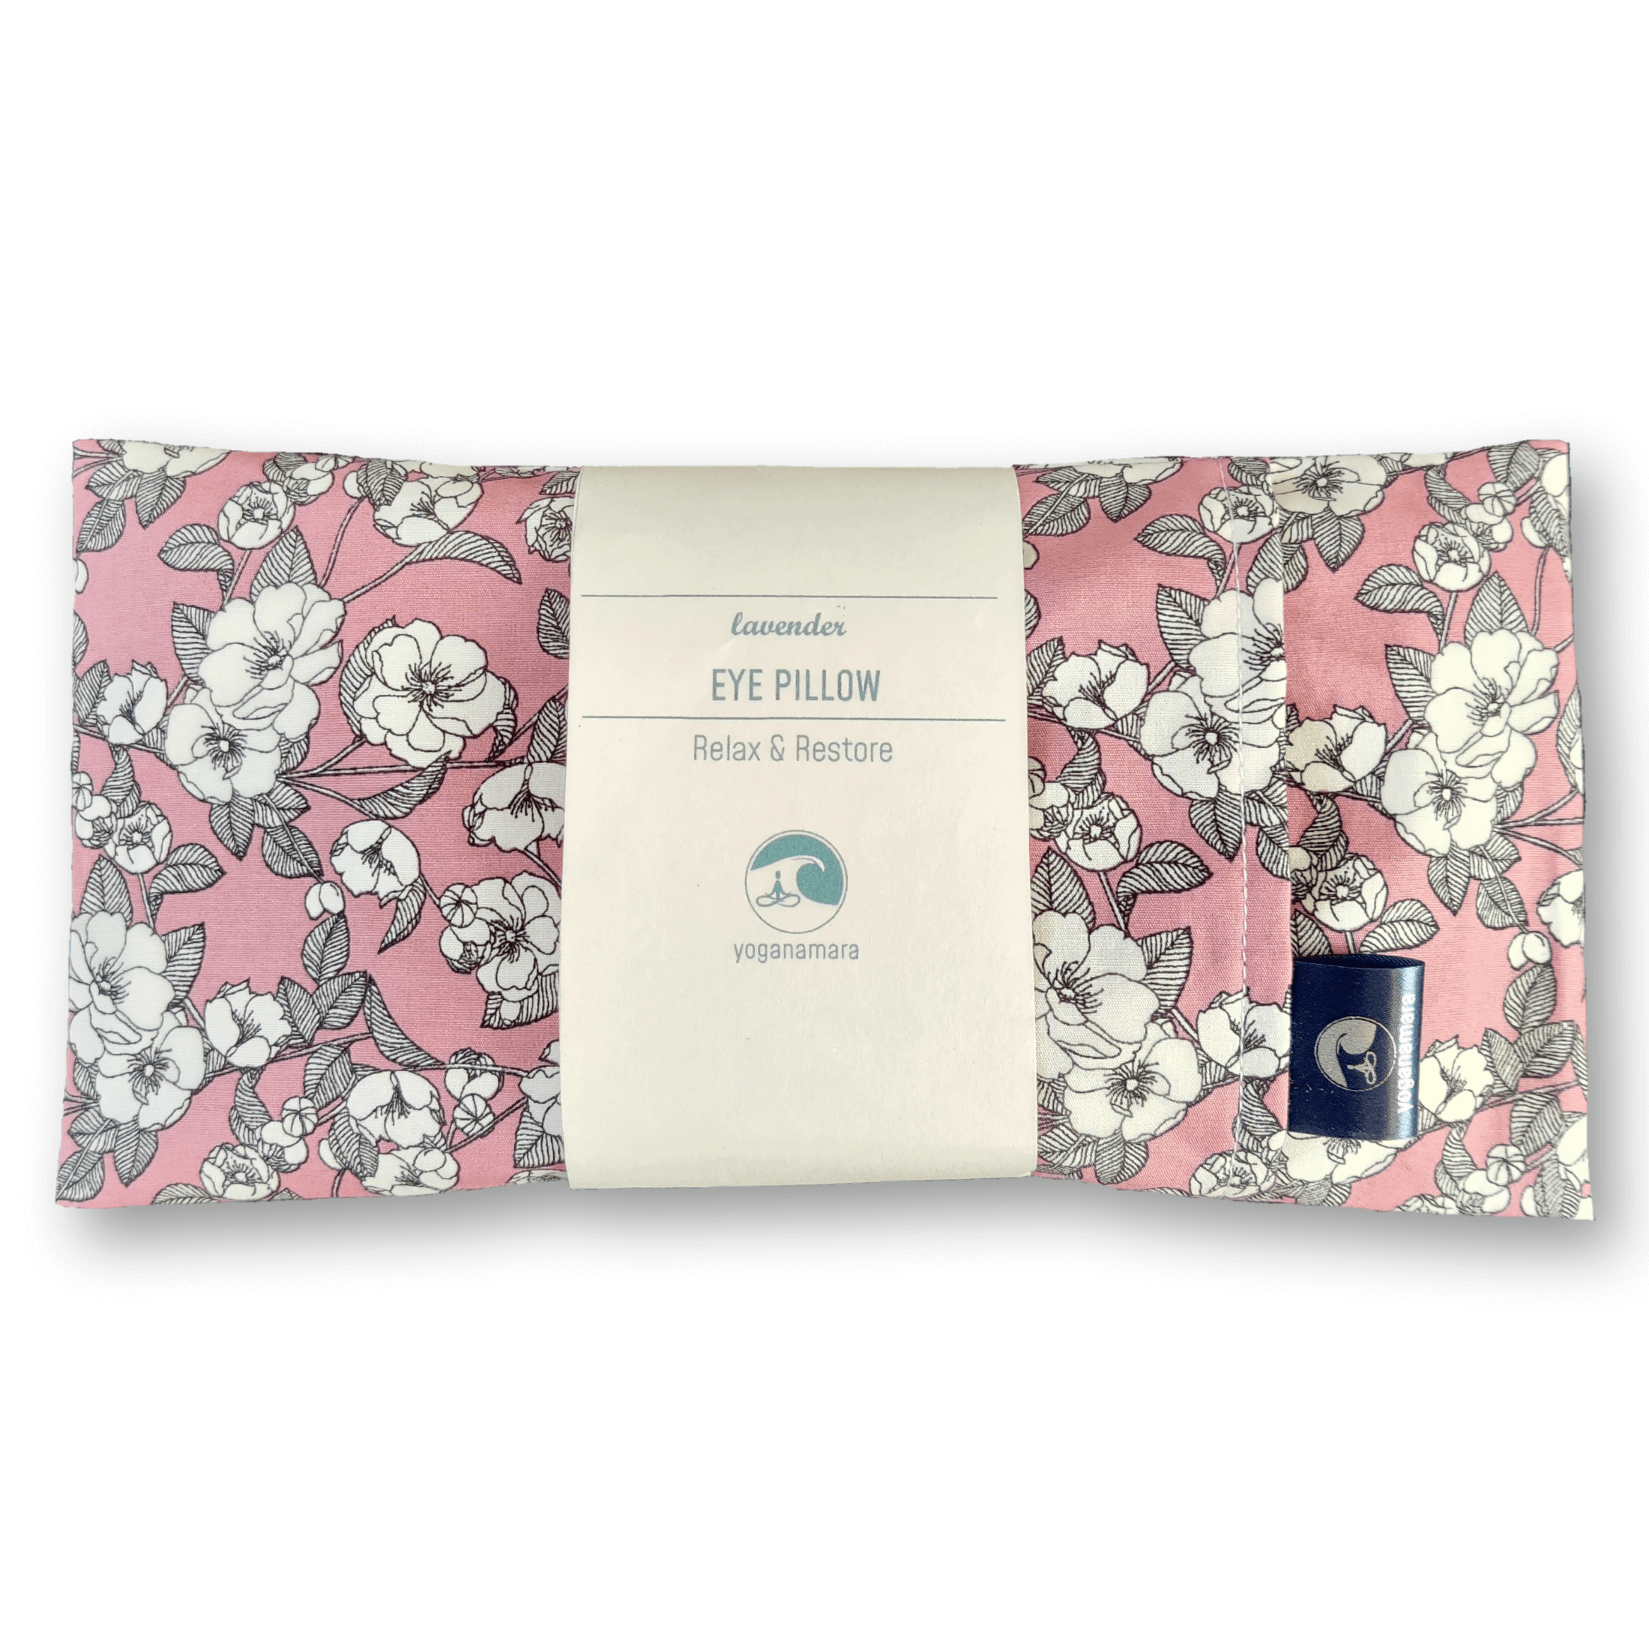 eye pillow made in Ireland